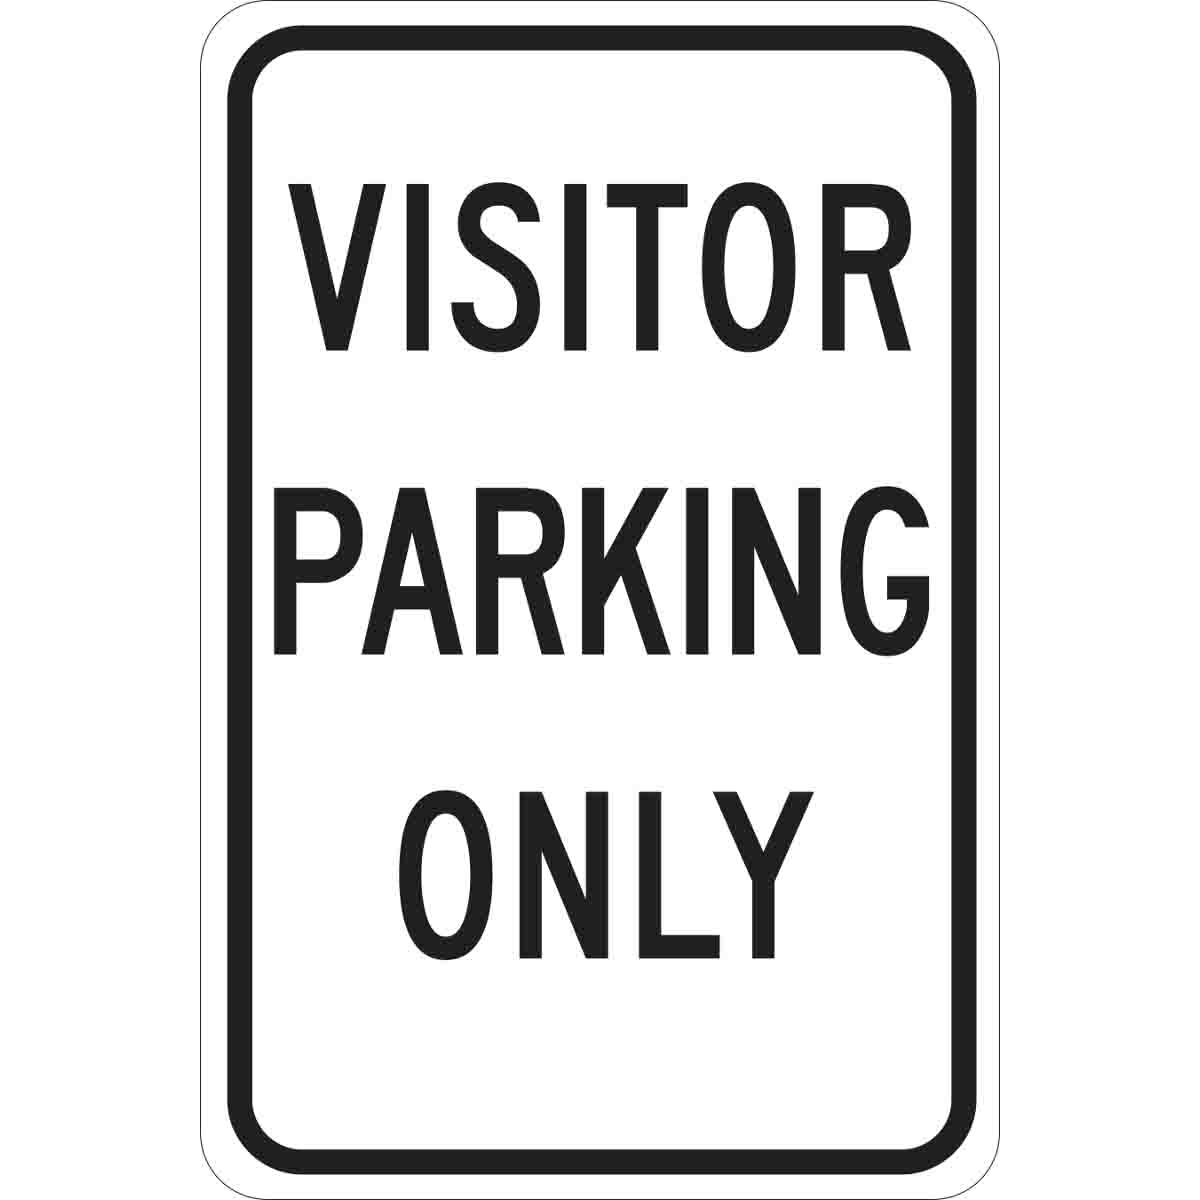 18 Height Brady 129747 Traffic Control Sign Red on White LegendNo Parking School Days 12 Width 